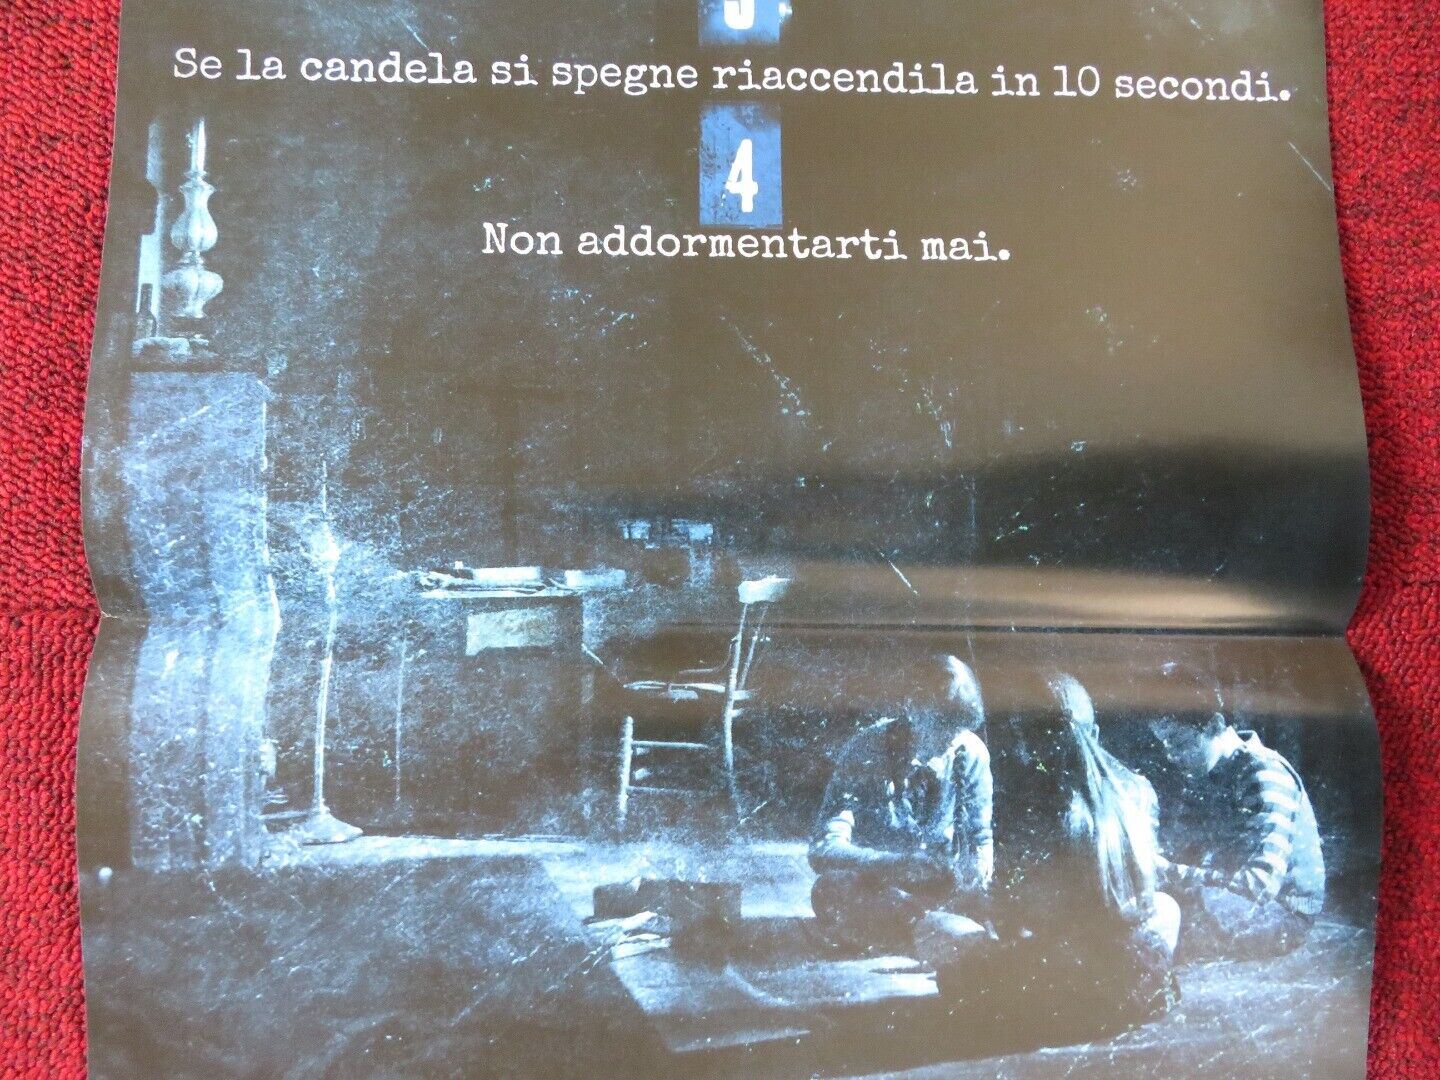 THE MIDNIGHT MAN ITALIAN LOCANDINA (26.5"x12.5") POSTER TRAVIS ZARIWNY 2018